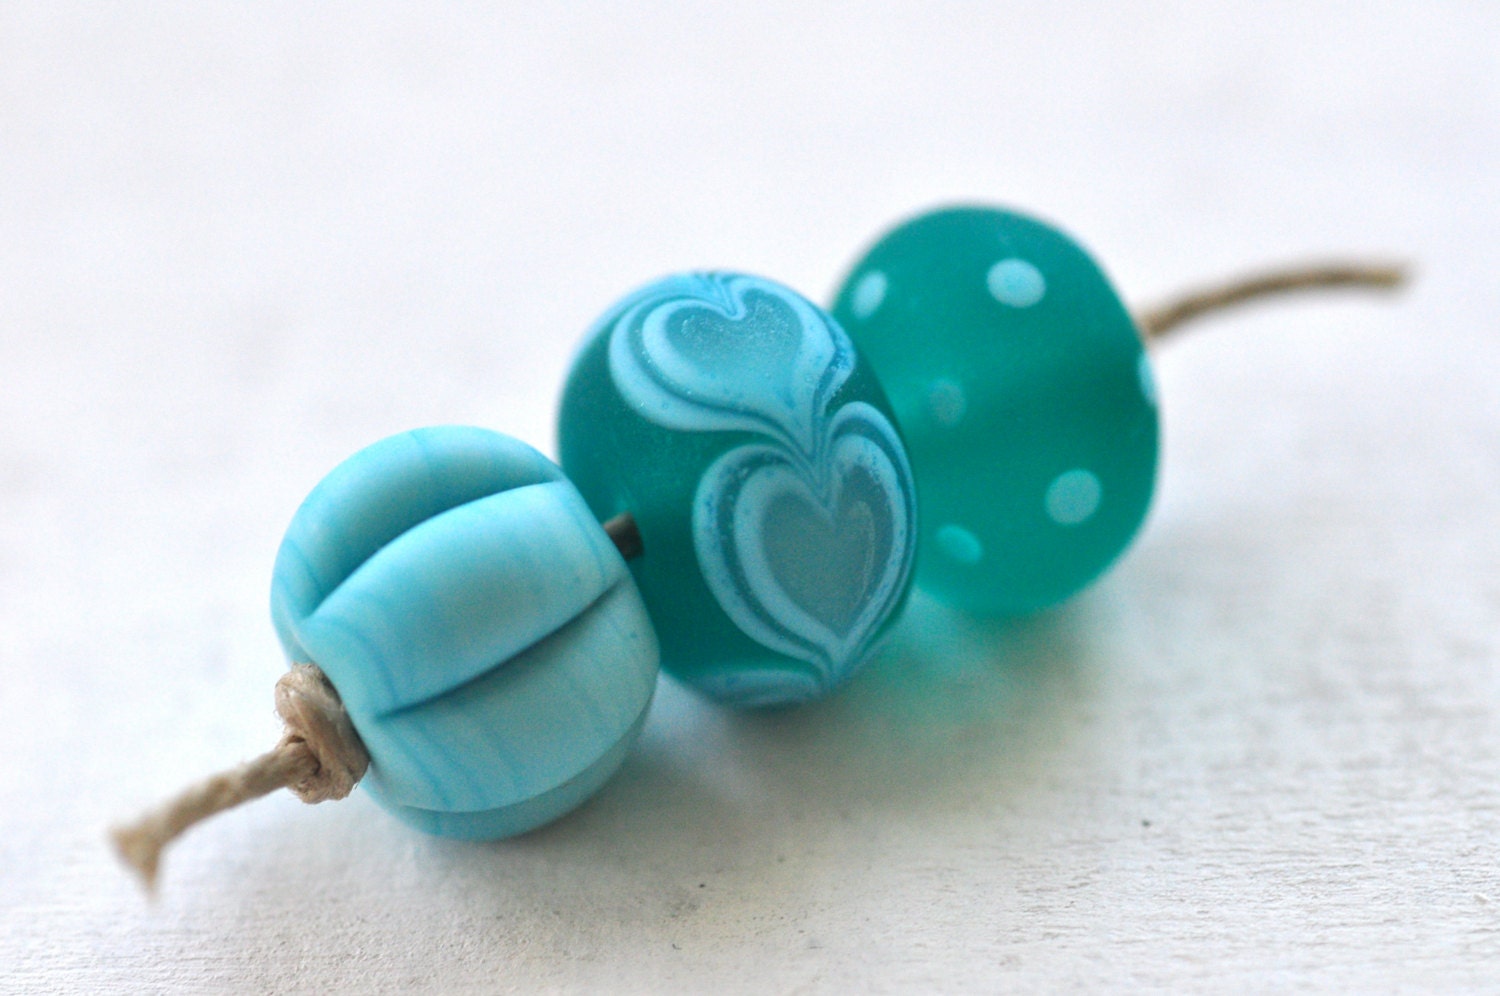 p i n o c e a n handmade lampwork beads set (3) - Blue / teal hearts  -